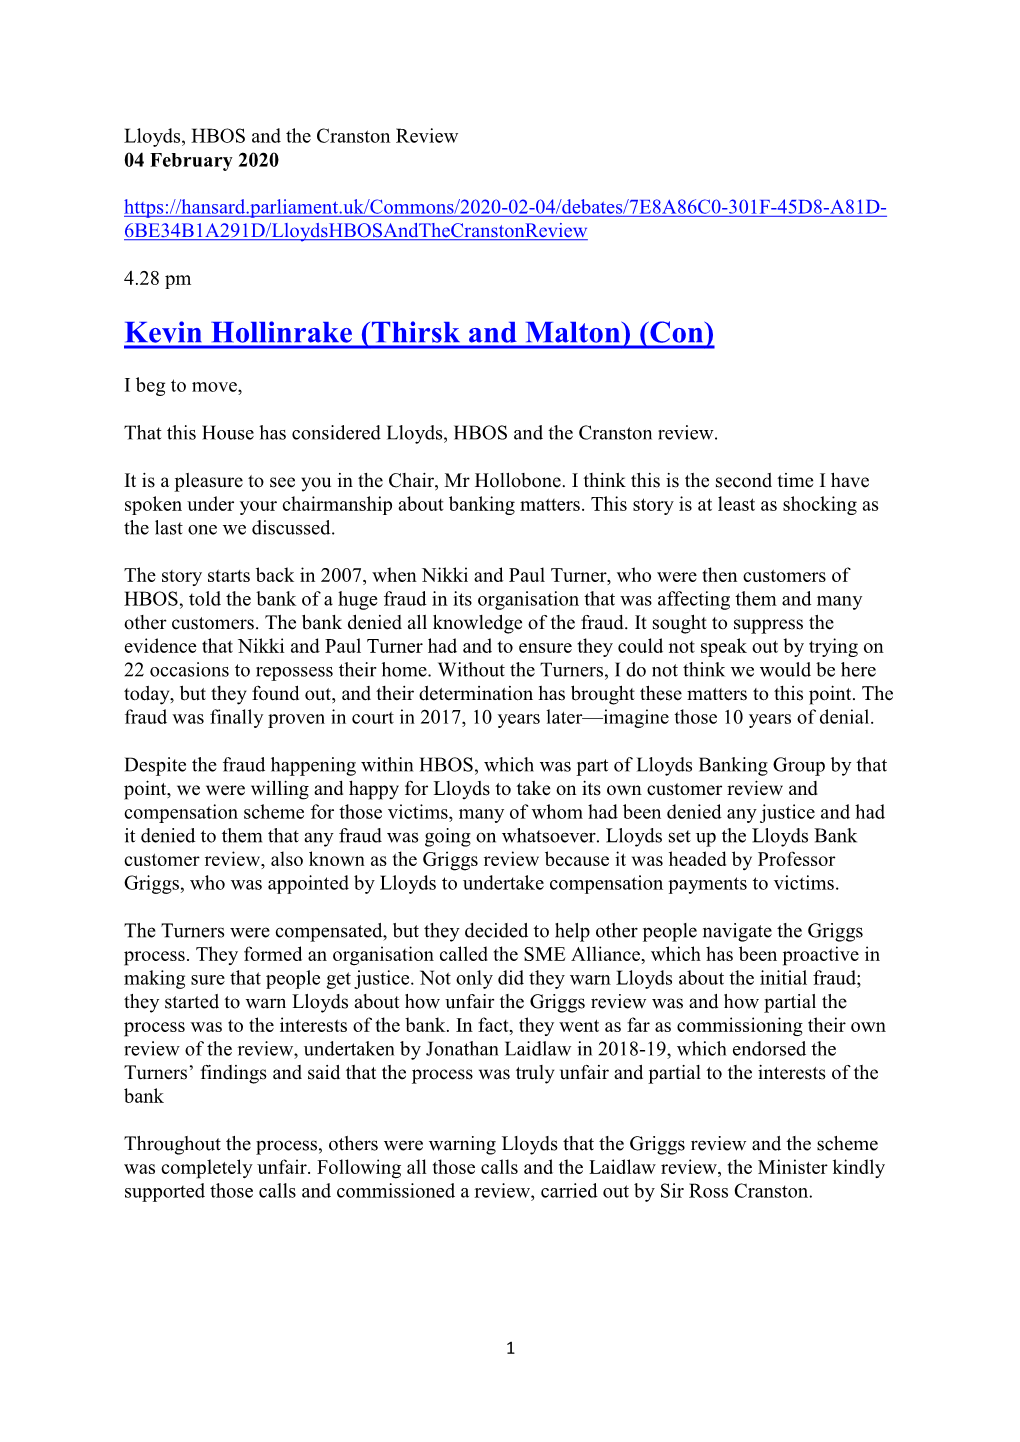 Hansard – Lloyds, HBOS and the Cranston Report